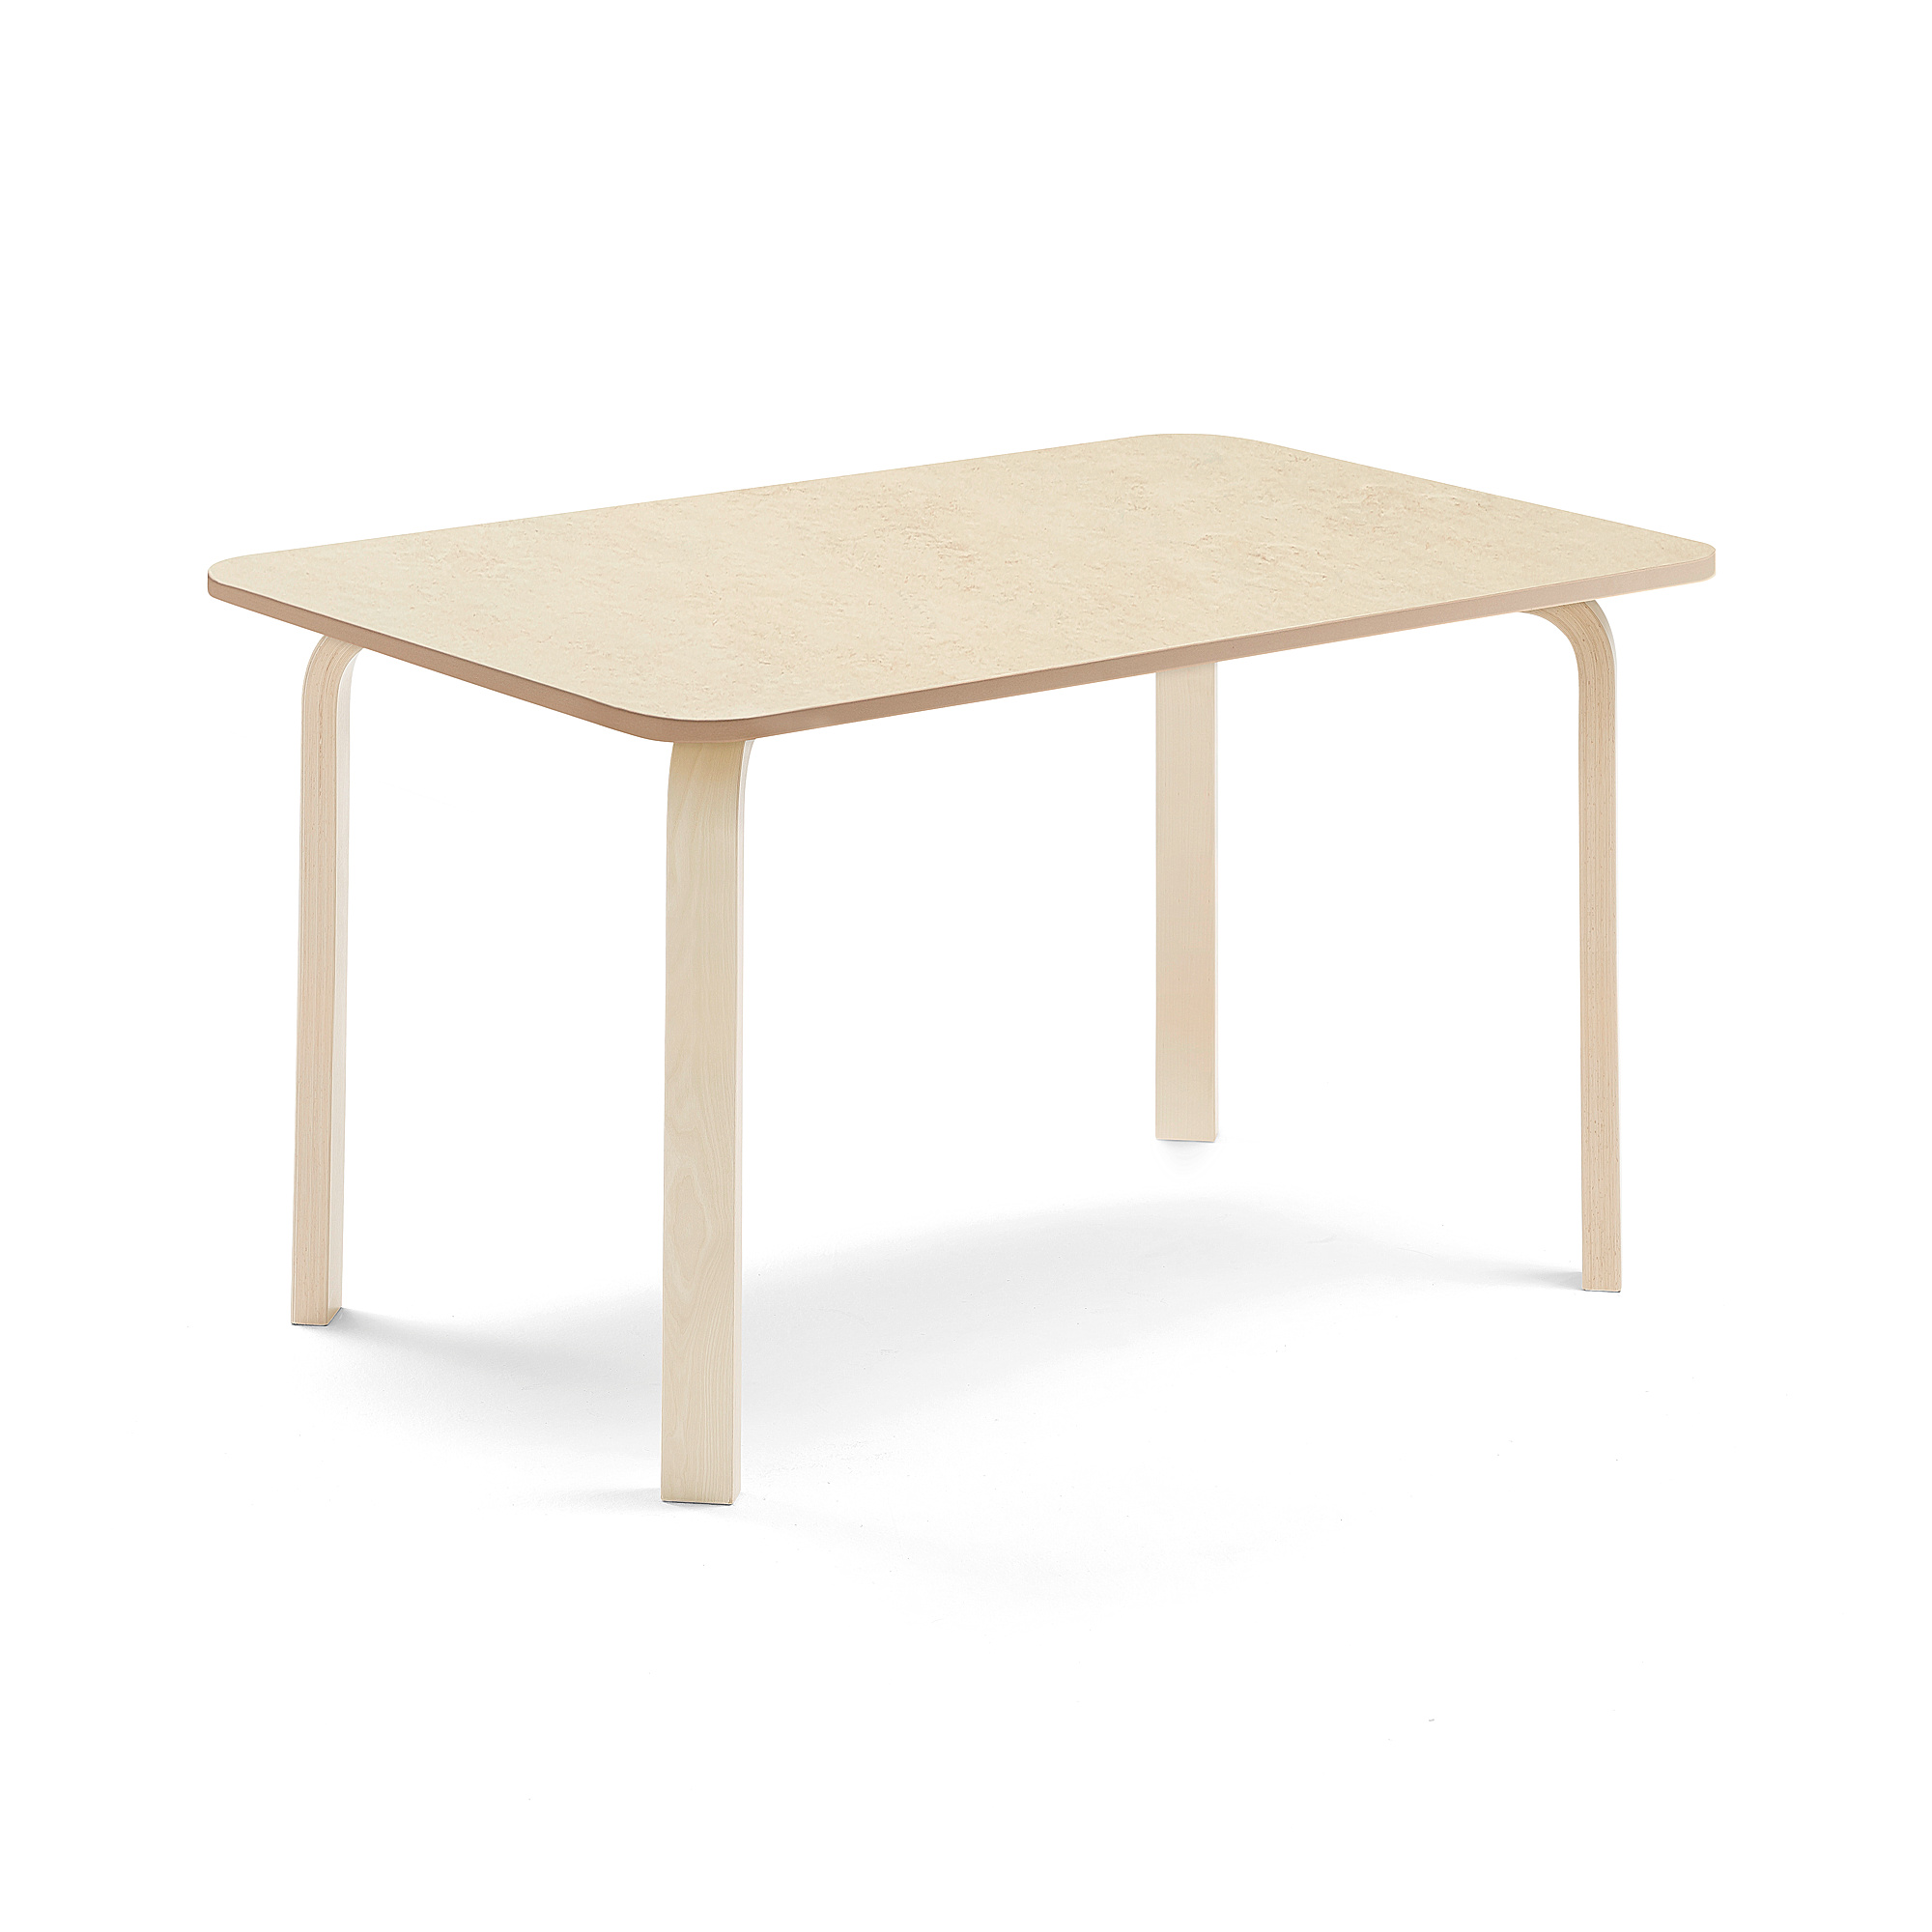 Stůl ELTON, 1200x600x640 mm, bříza, akustické linoleum, béžová